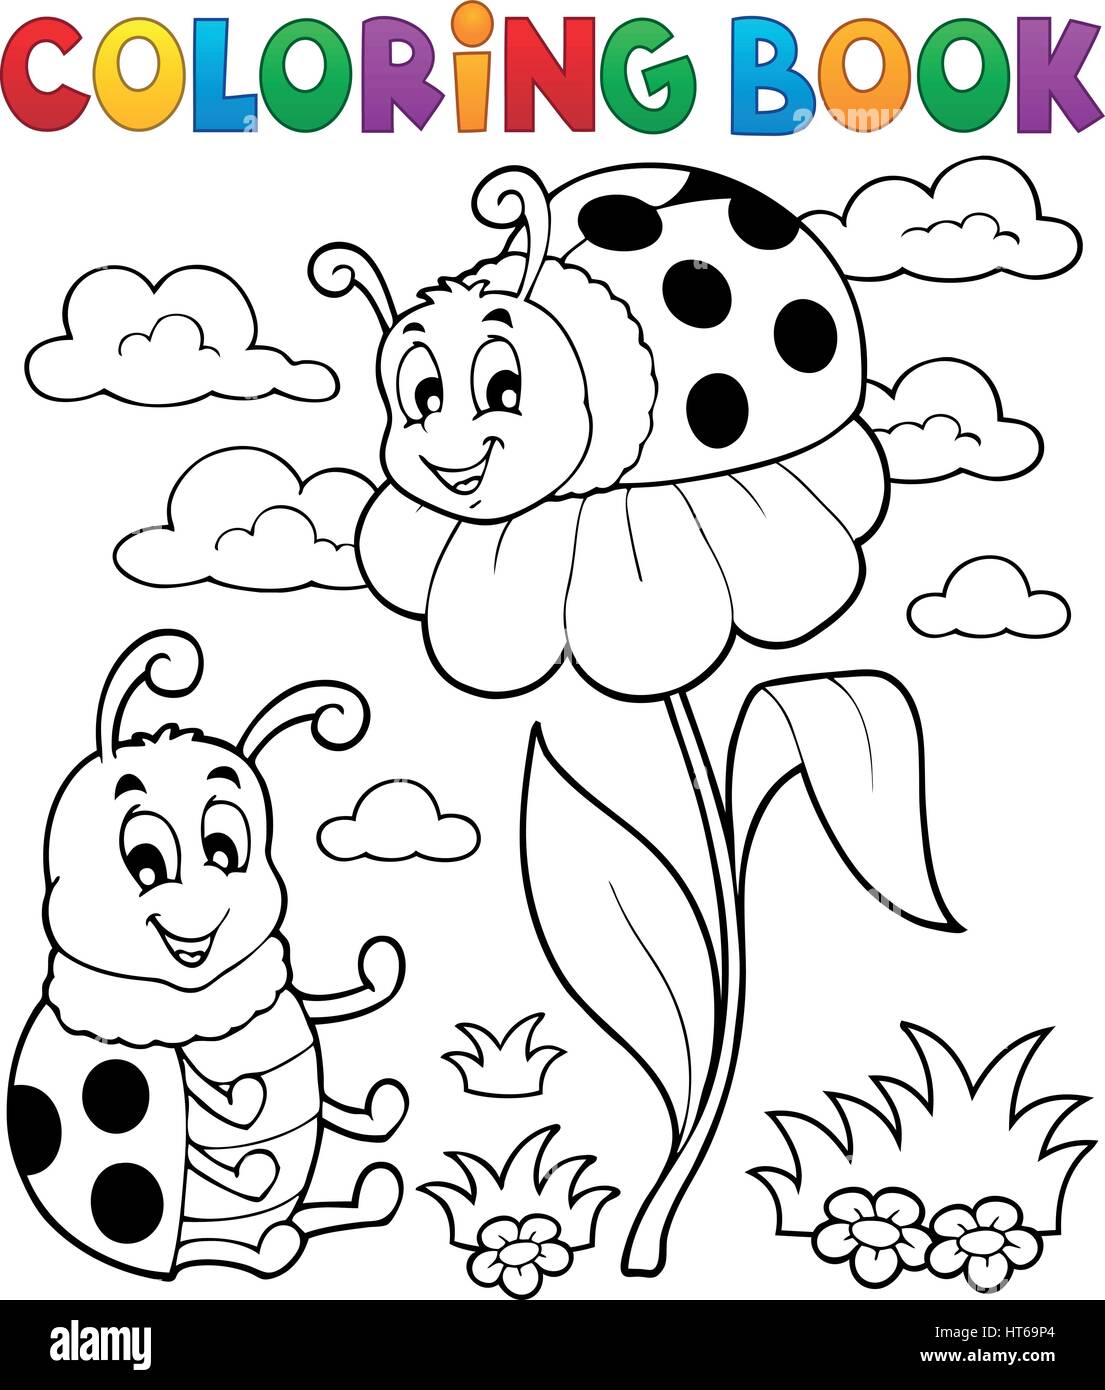 Download Coloring Book Ladybug Theme 3 Eps10 Vector Illustration Stock Vector Image Art Alamy